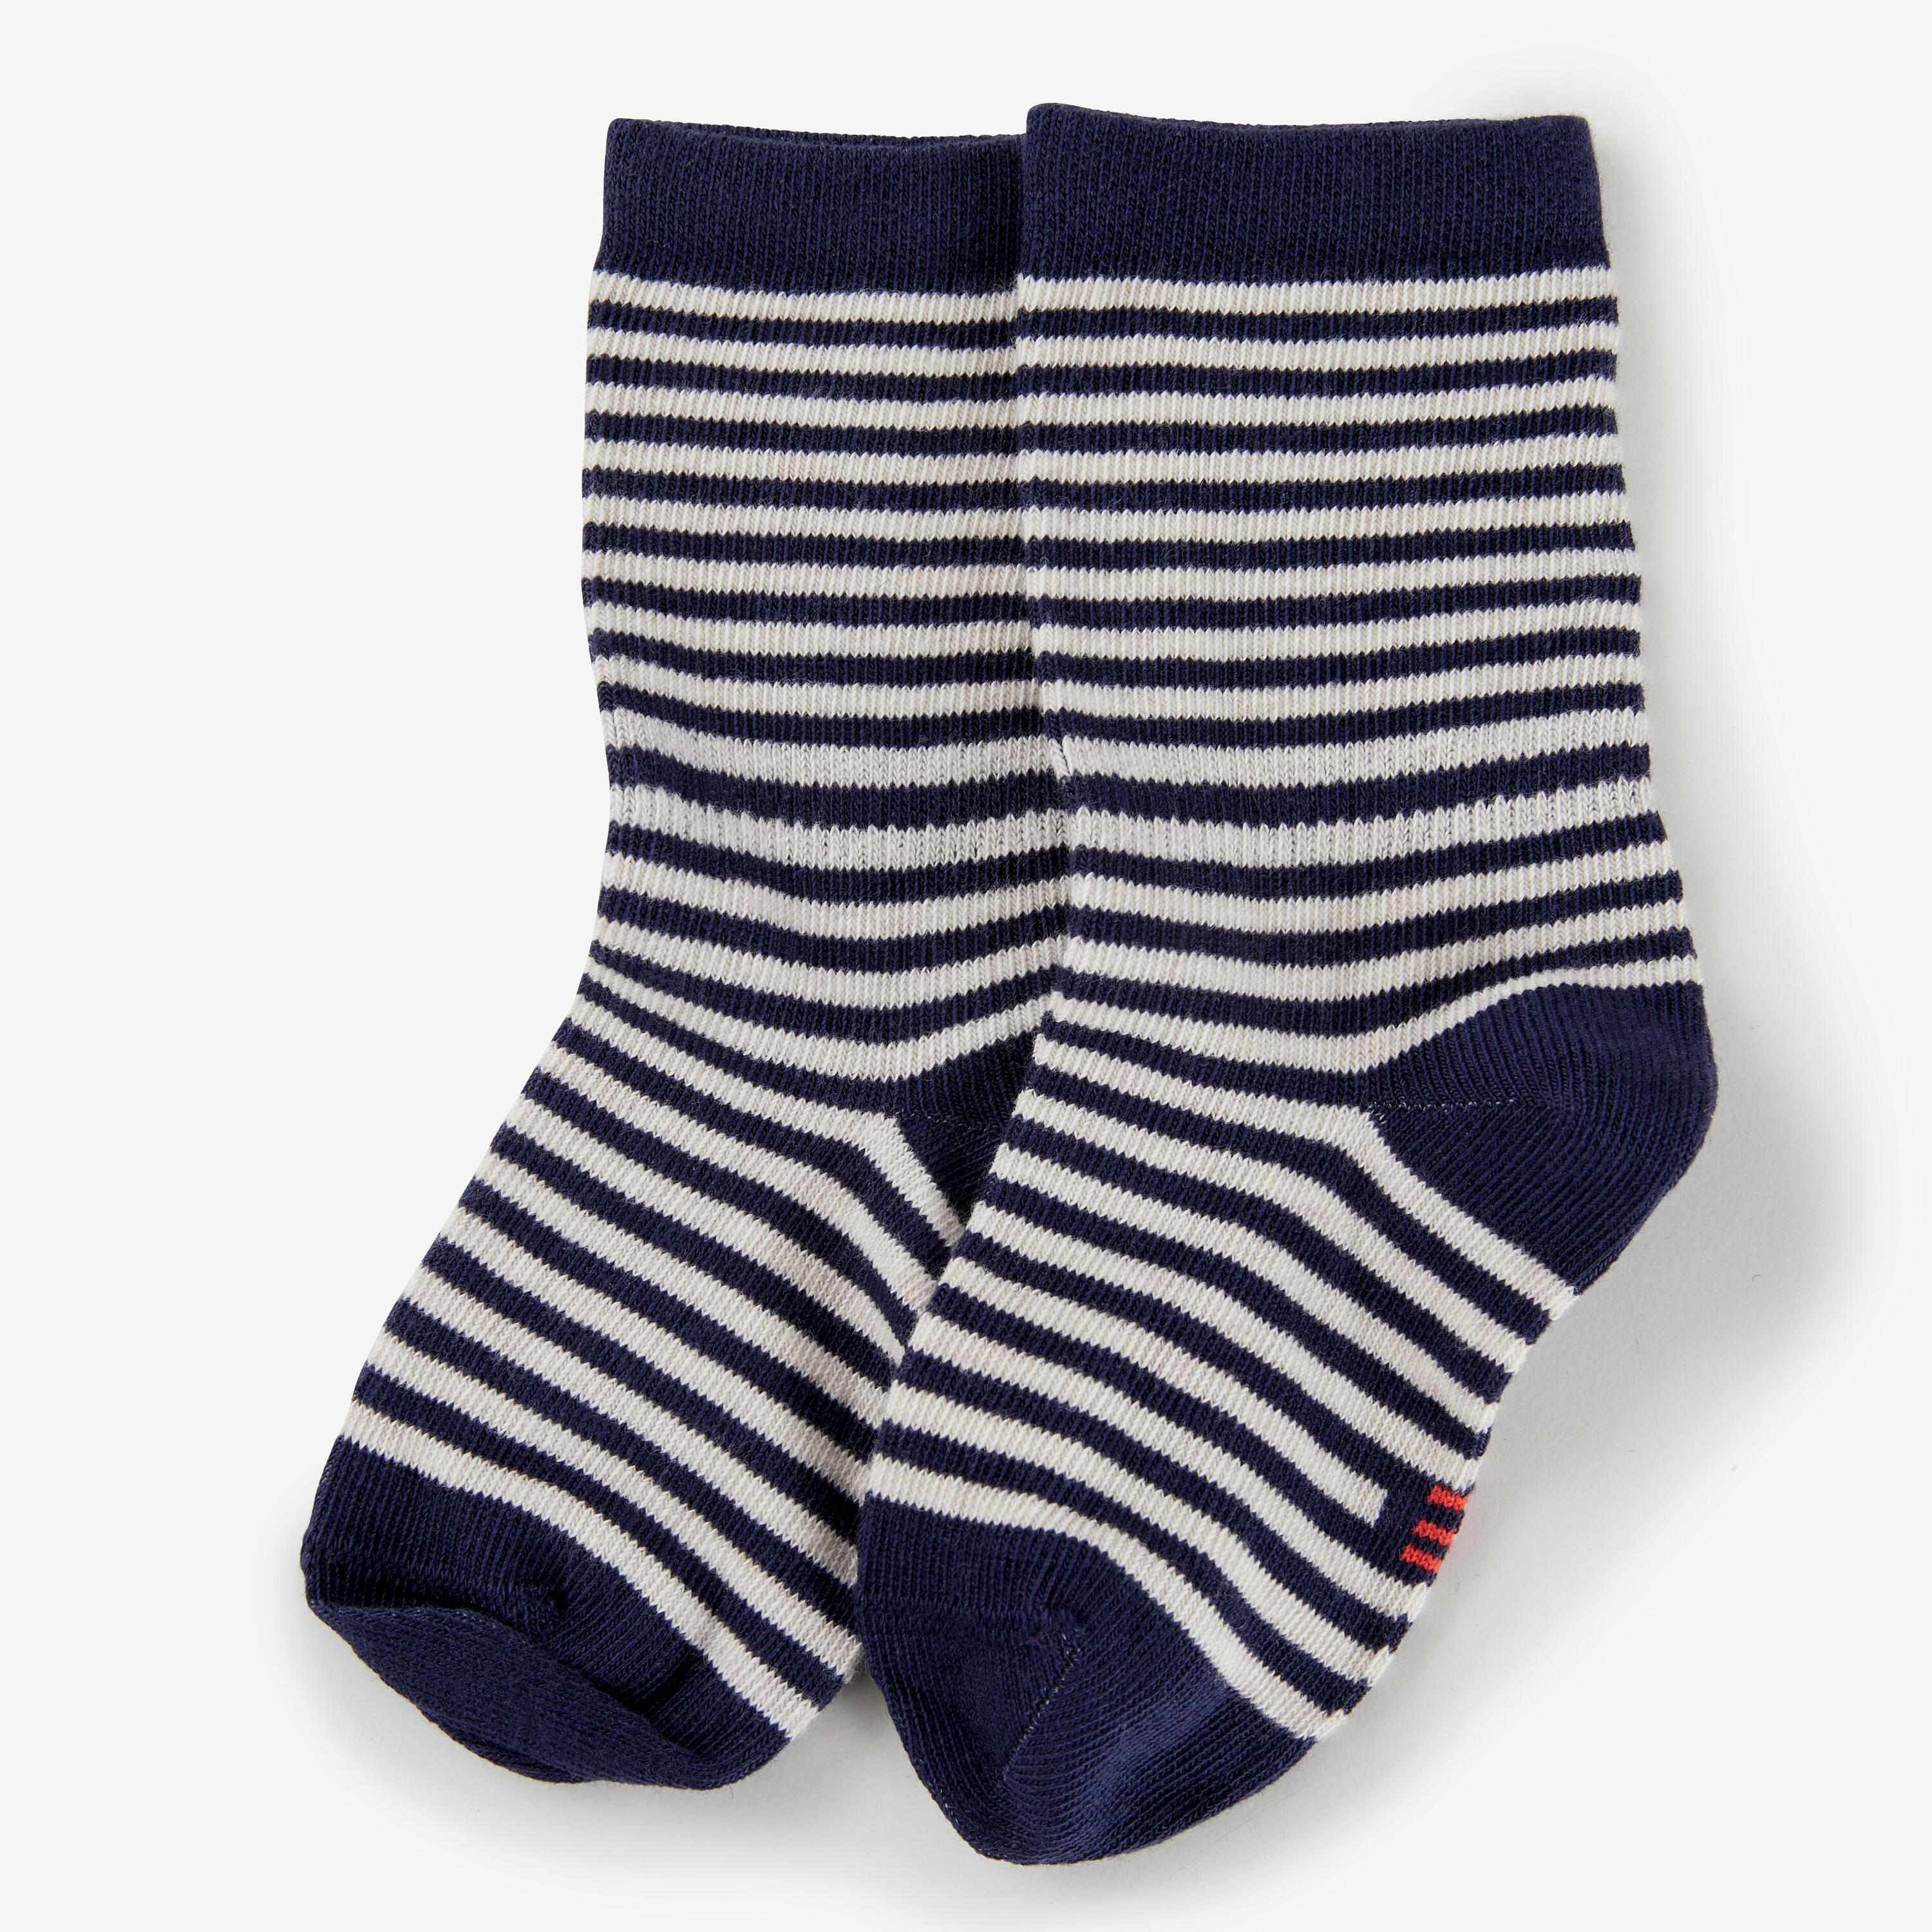 Kids' Socks 5-Pack - Patterns 5/6